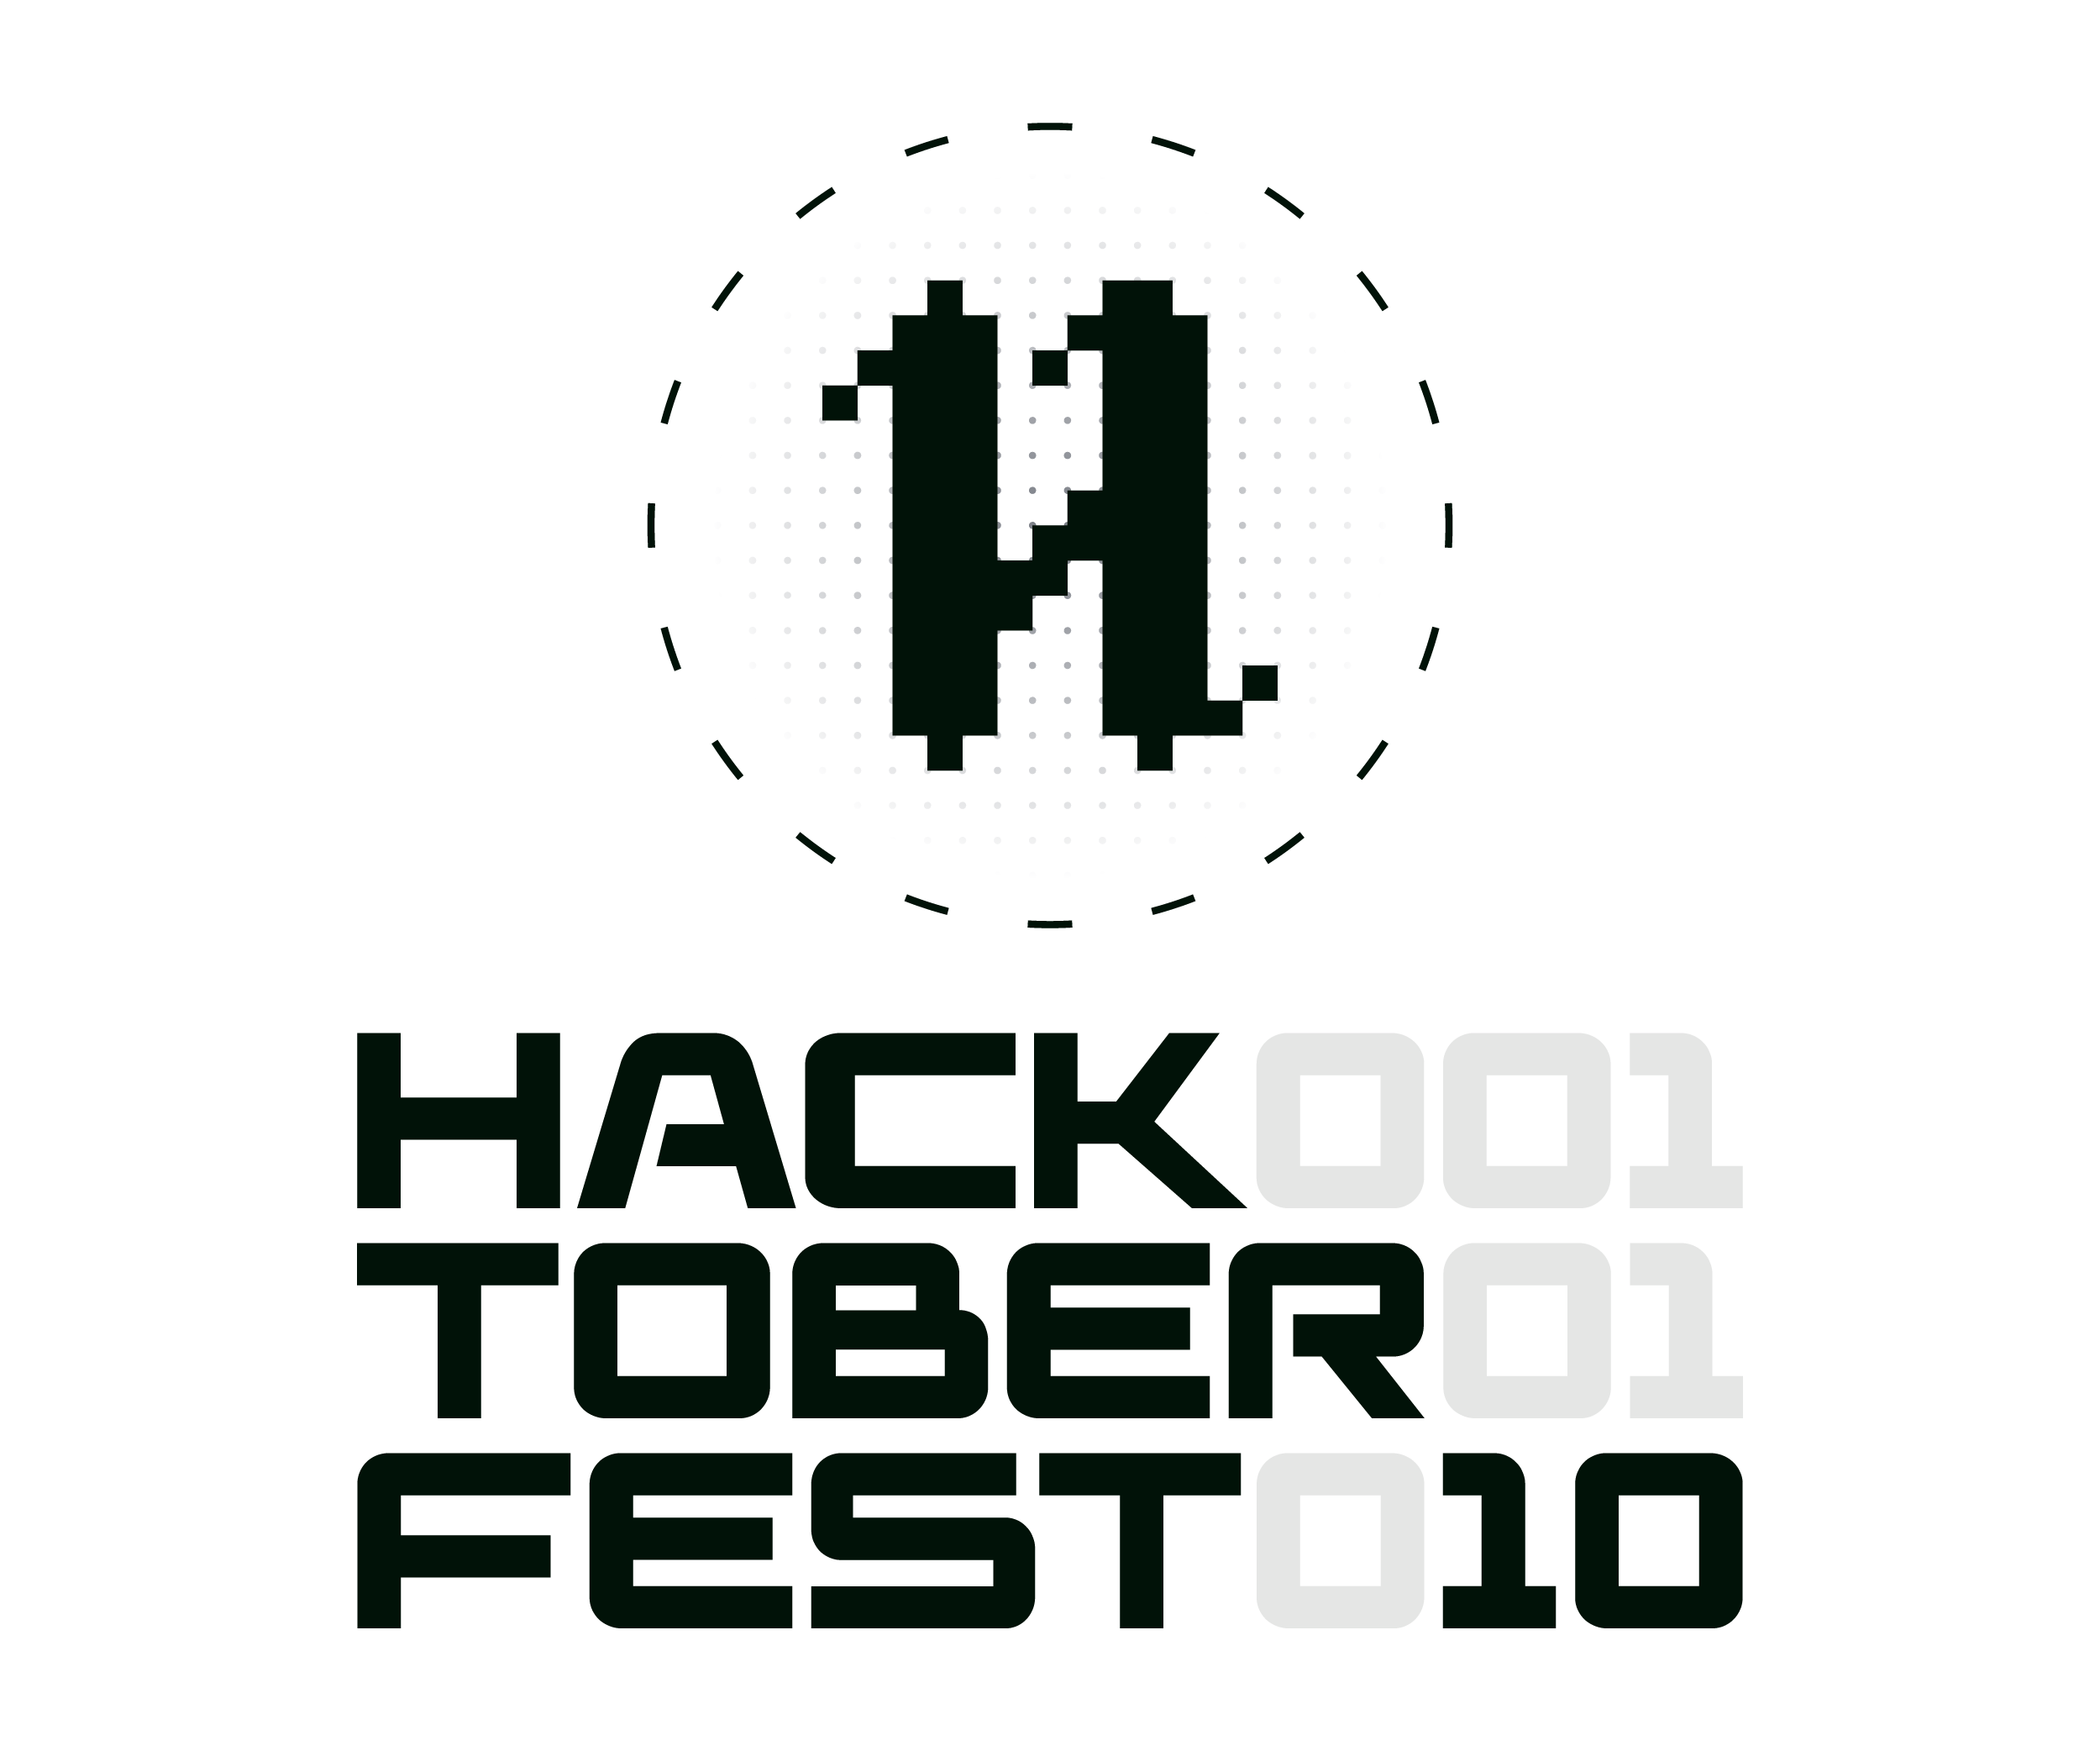 Hacktober Fest logo